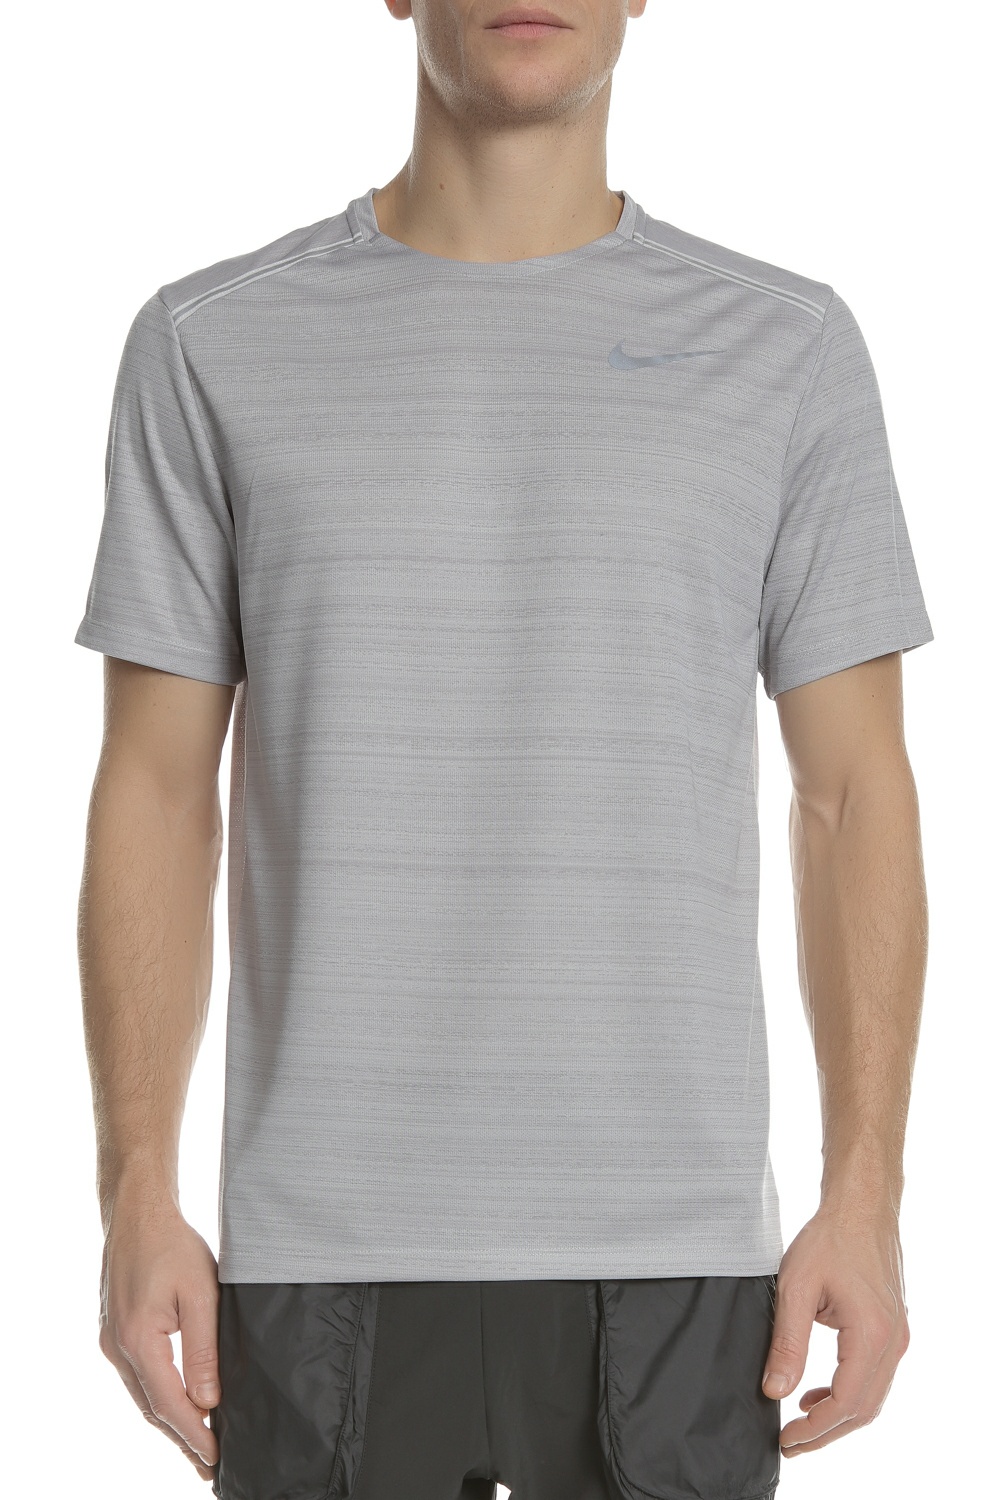 NIKE Ανδρική κοντομάνικη μπλούζα Nike Dri-FIT Miler γκρι